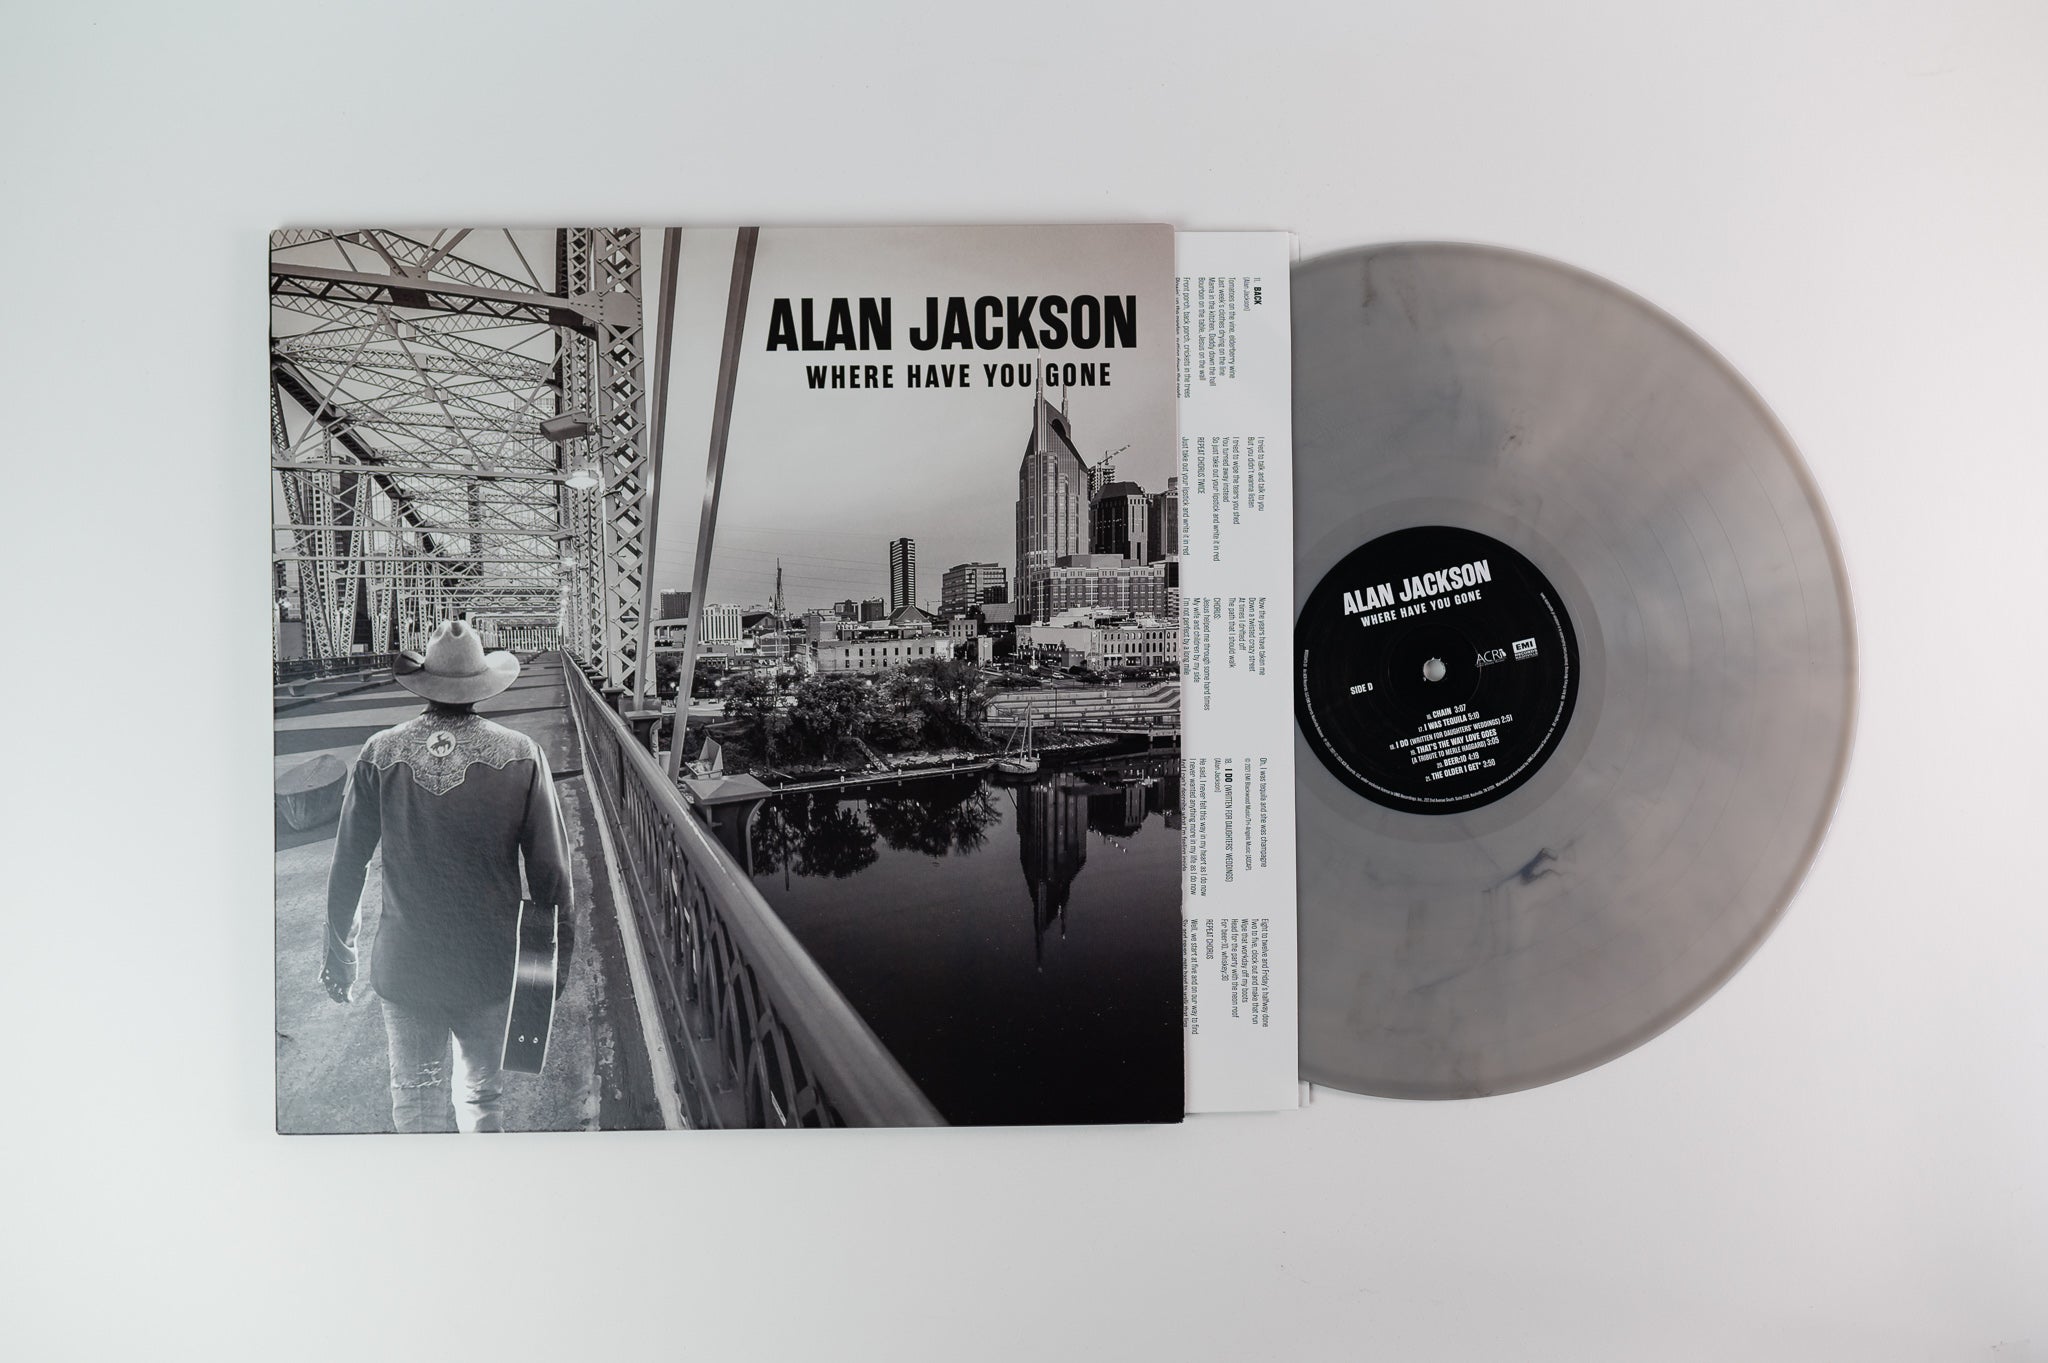 Alan Jackson - Where Have You Gone on ACR Black & White Swirl Vinyl